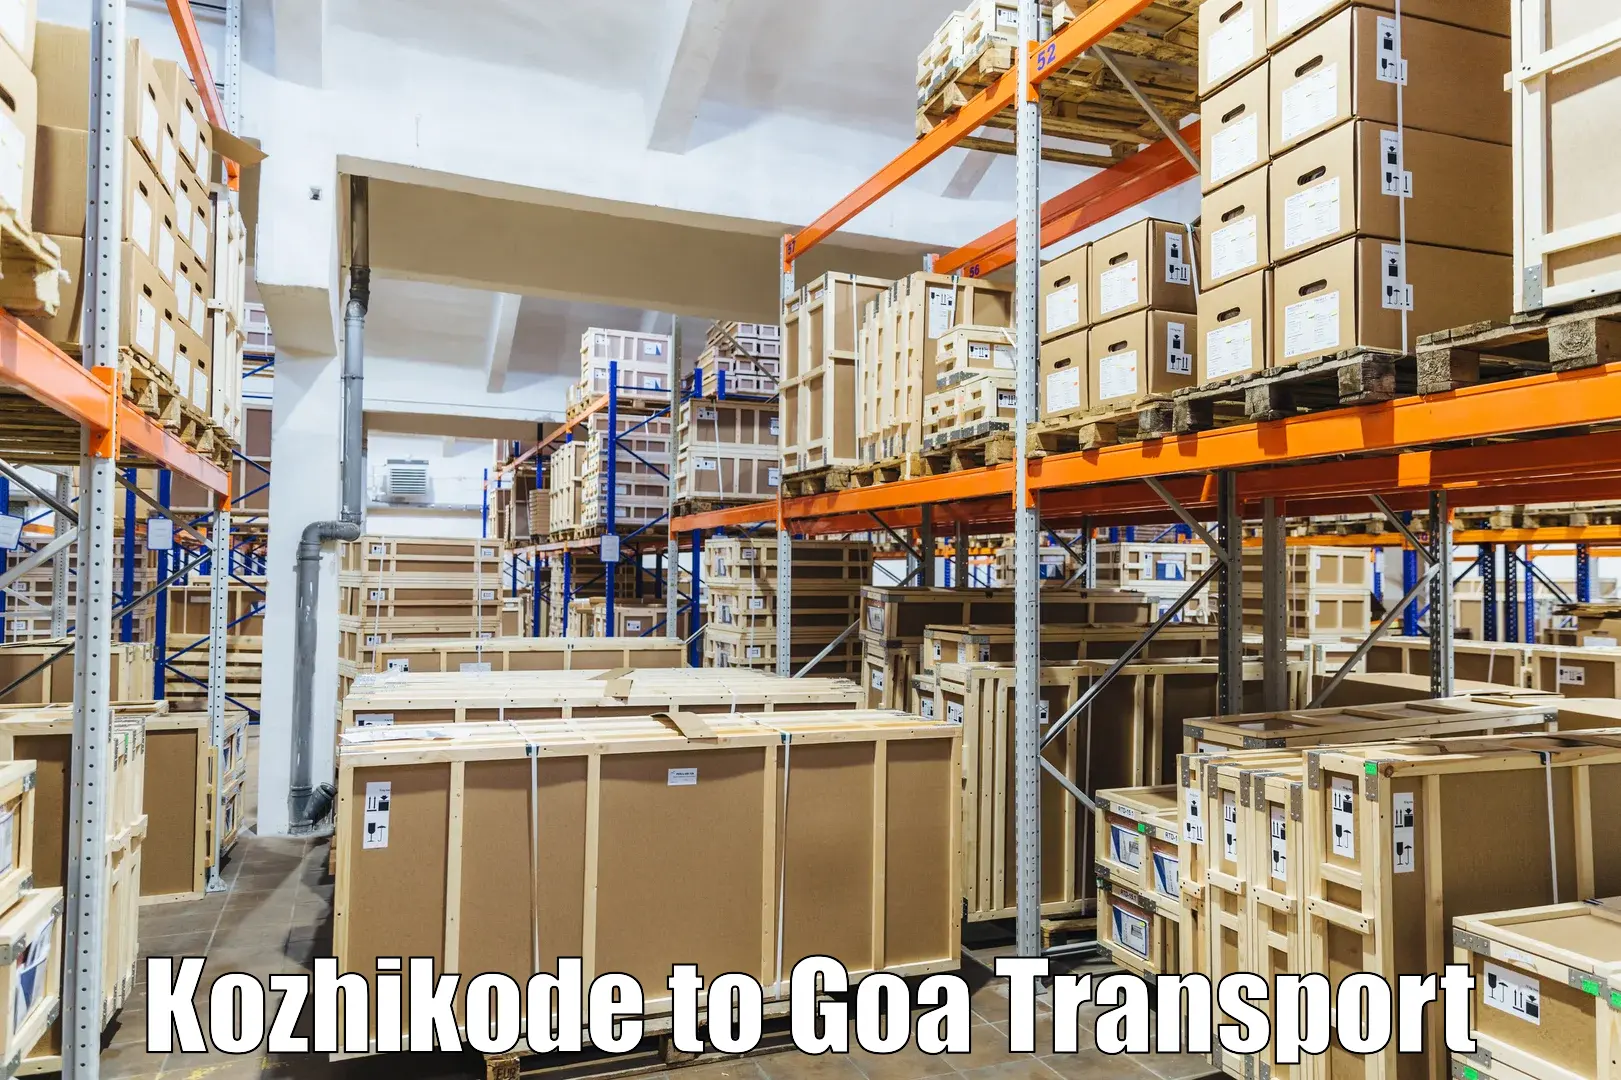 Delivery service Kozhikode to Canacona